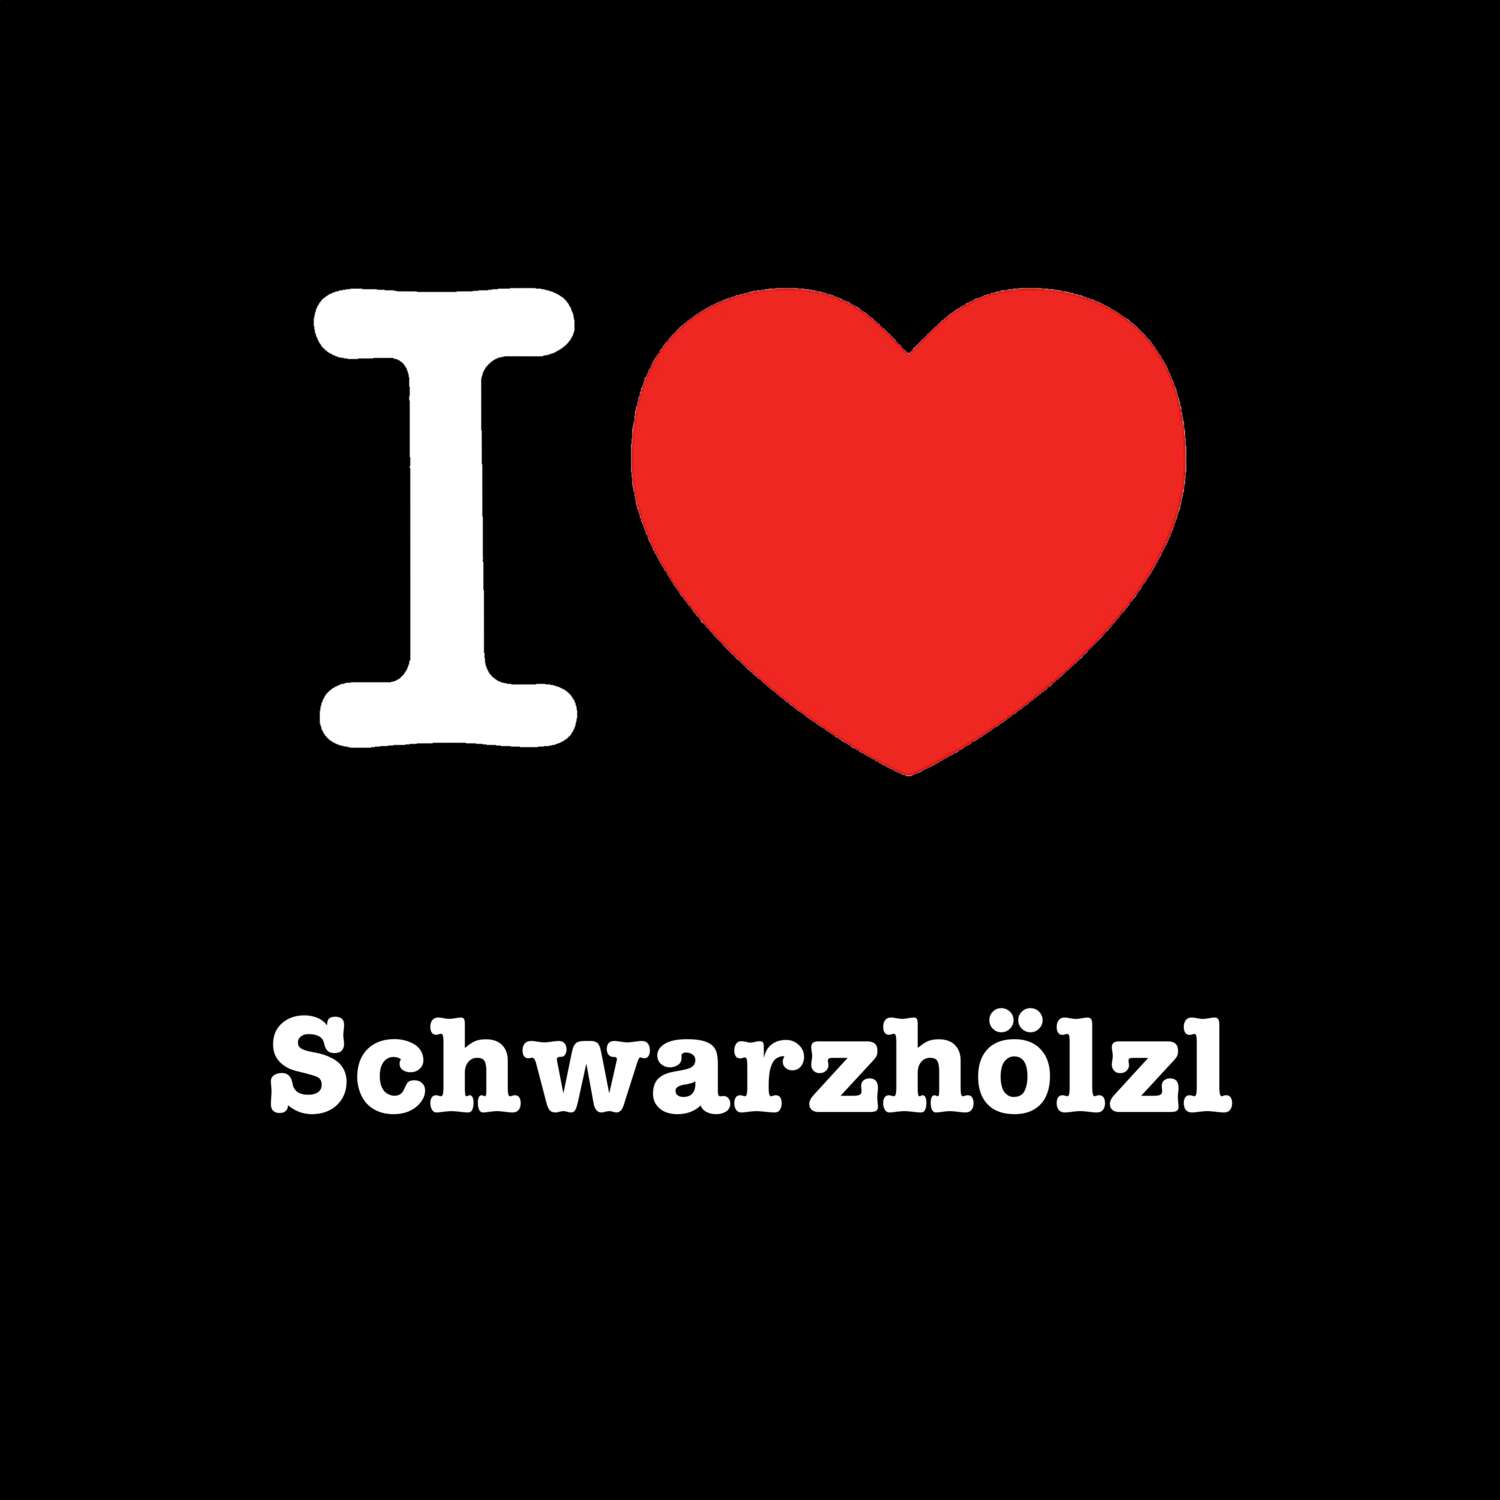 Schwarzhölzl T-Shirt »I love«